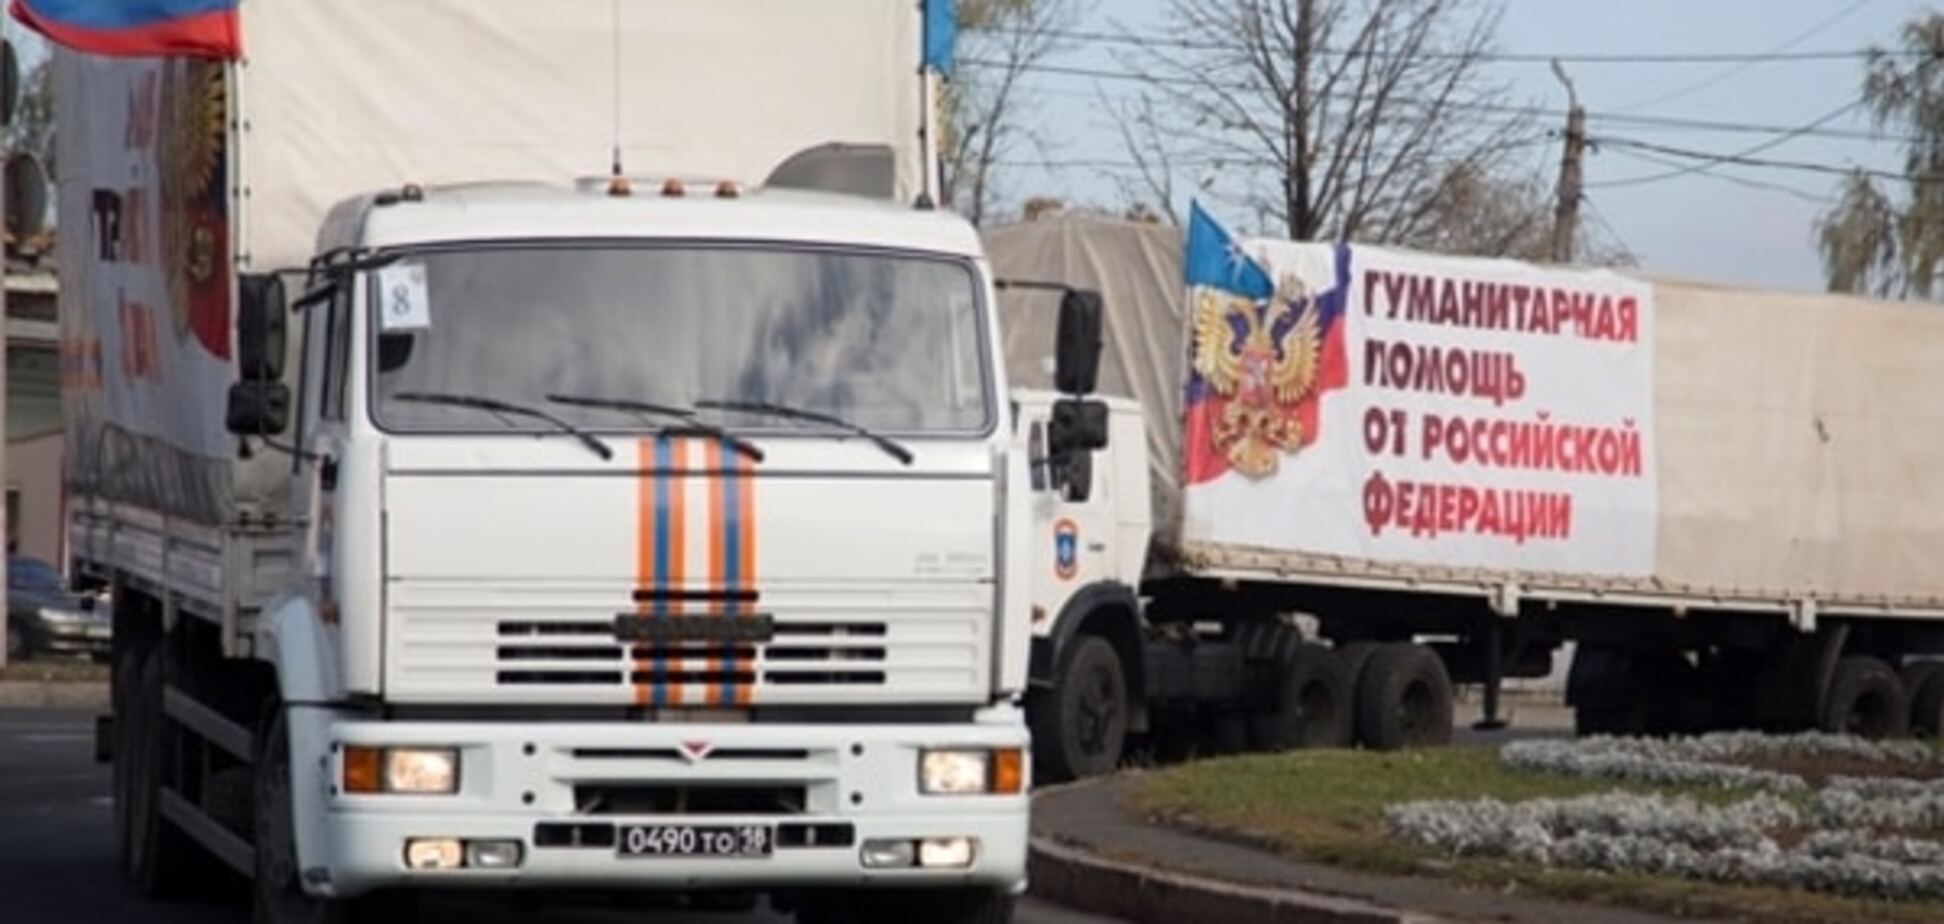 Як до себе додому: в Україну знову їде 'гумконвой' Росії